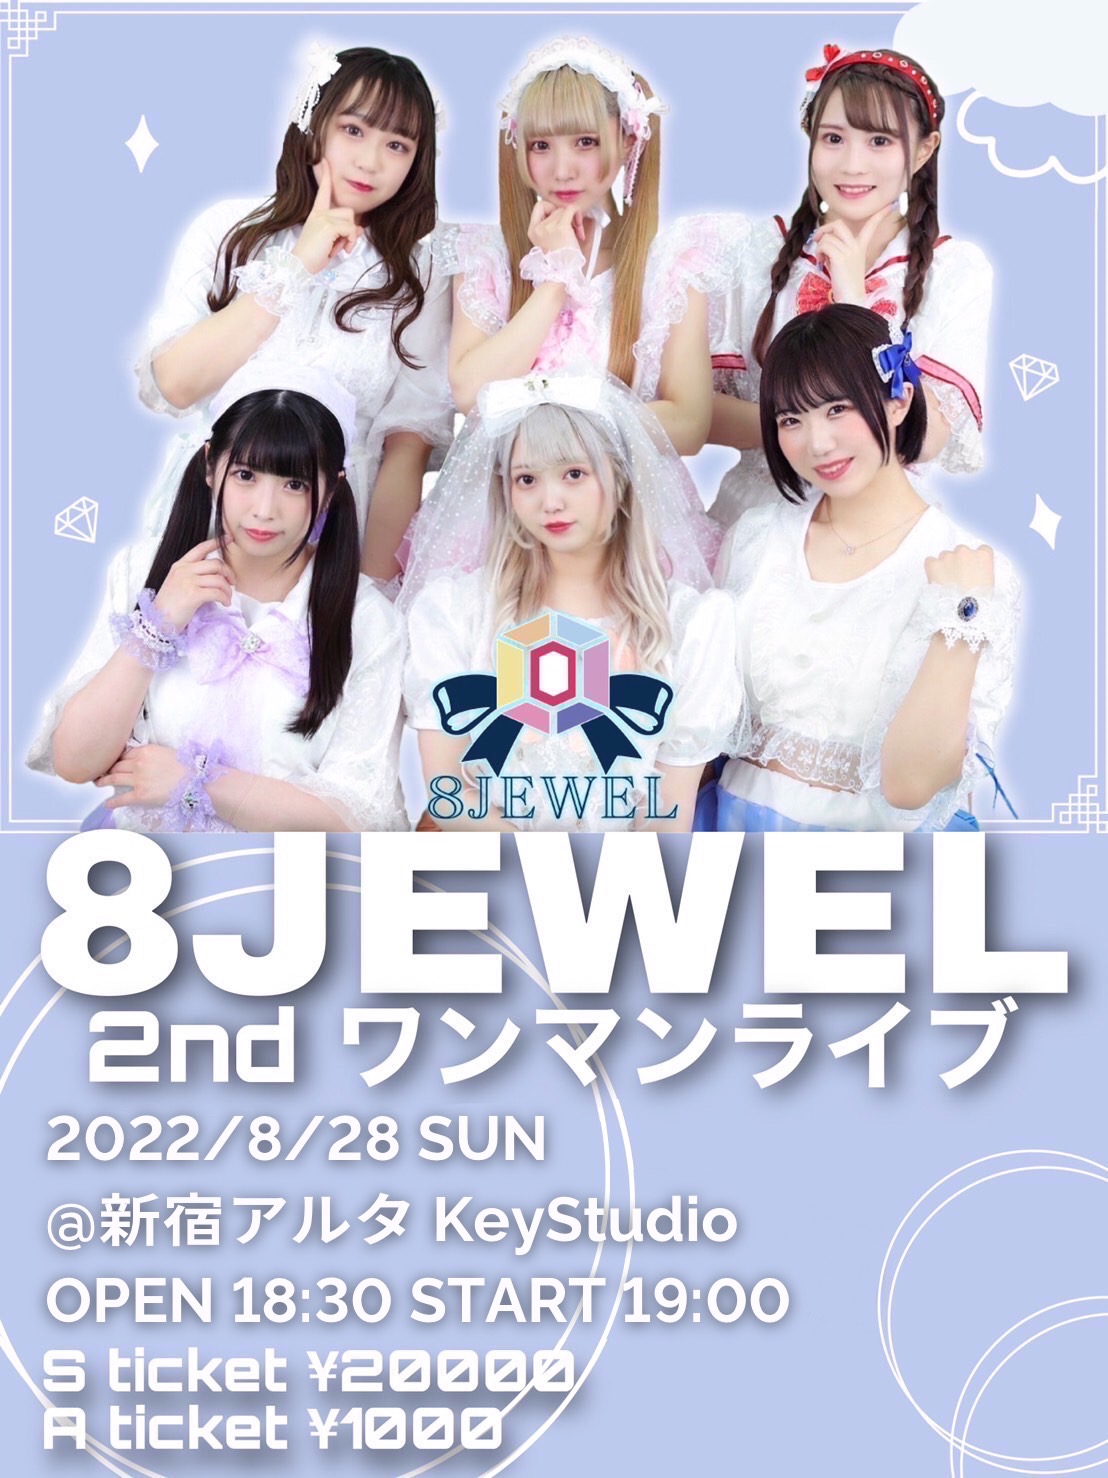 『8JEWEL 2nd ワンマンライブ』